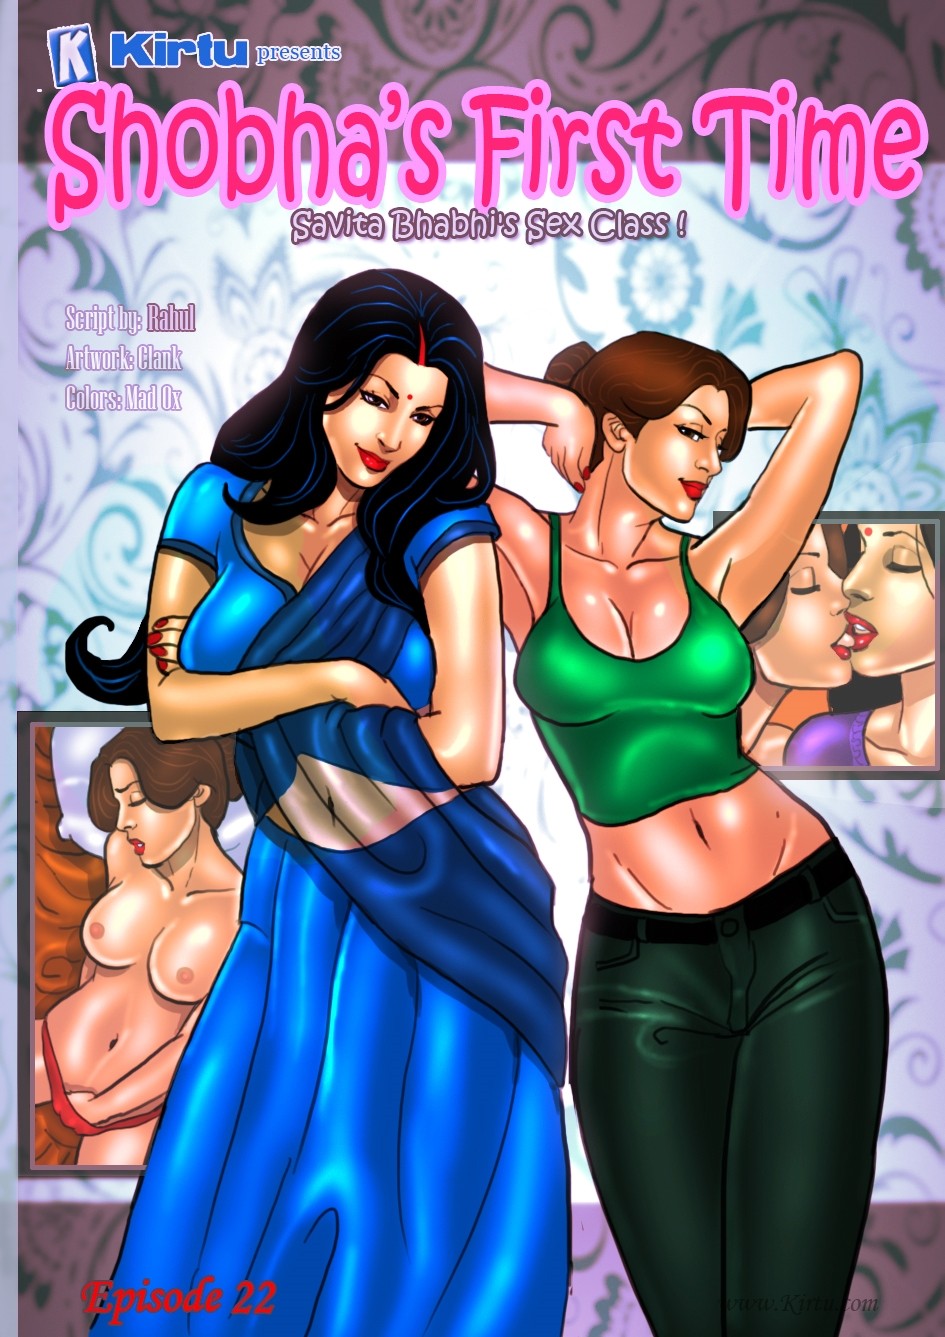 Sobhata Vabi Sex Vid - Savita Bhabhi 22- Shobha's First Time - Indian Porn comics and cartoons